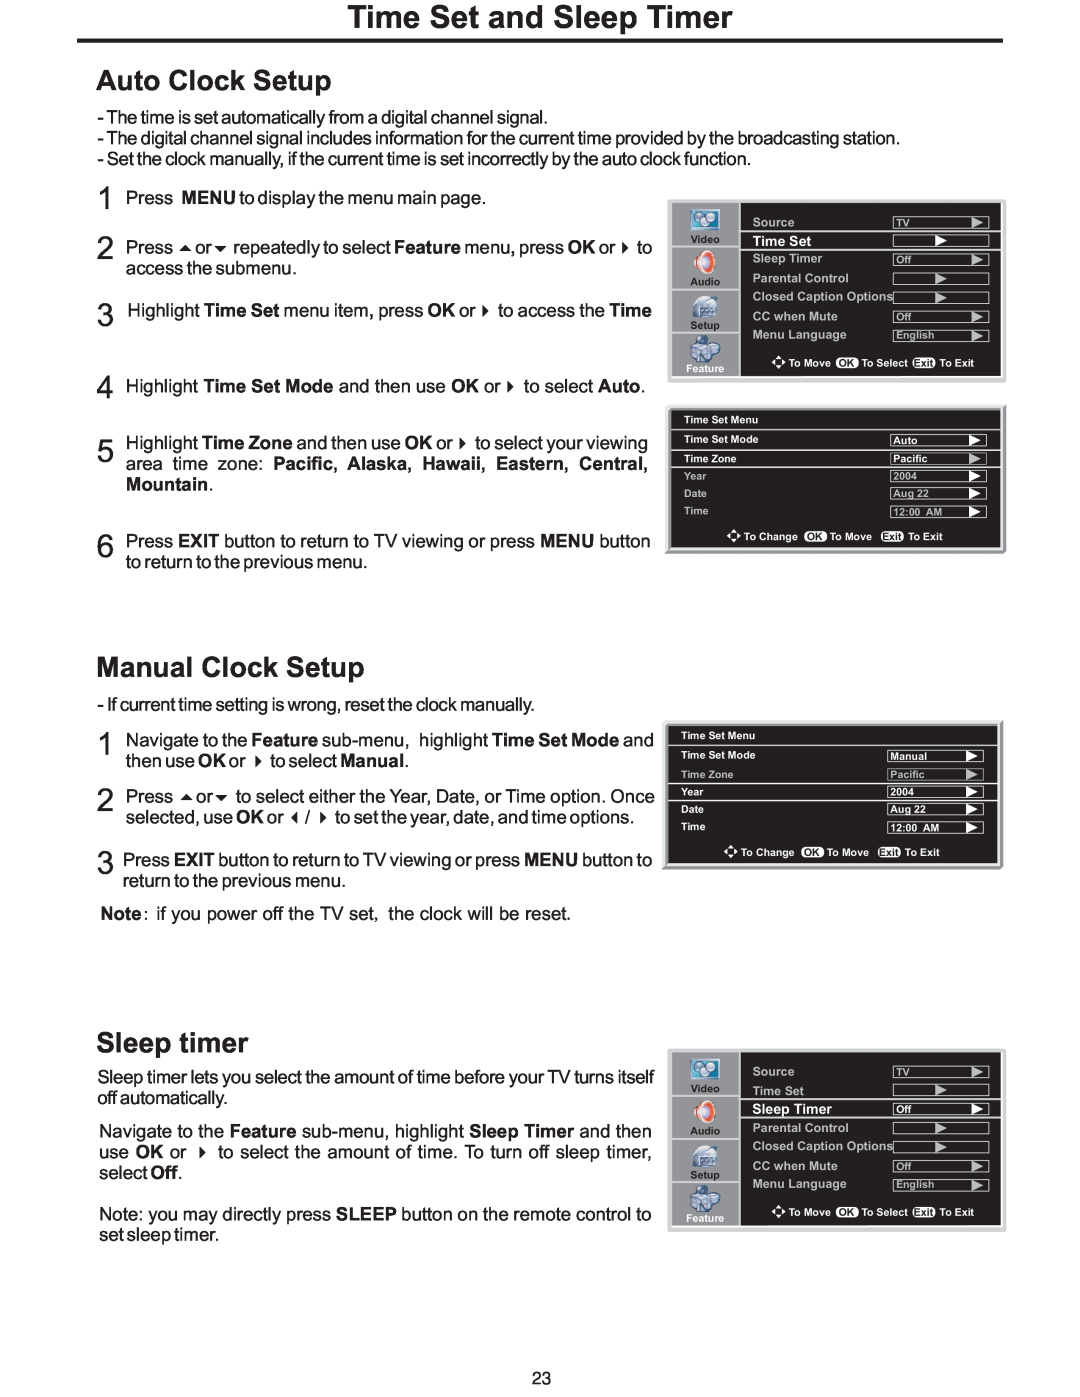 Polaroid PLA-4248 manual Time Set and Sleep Timer, Auto Clock Setup, Manual Clock Setup, Sleep timer 